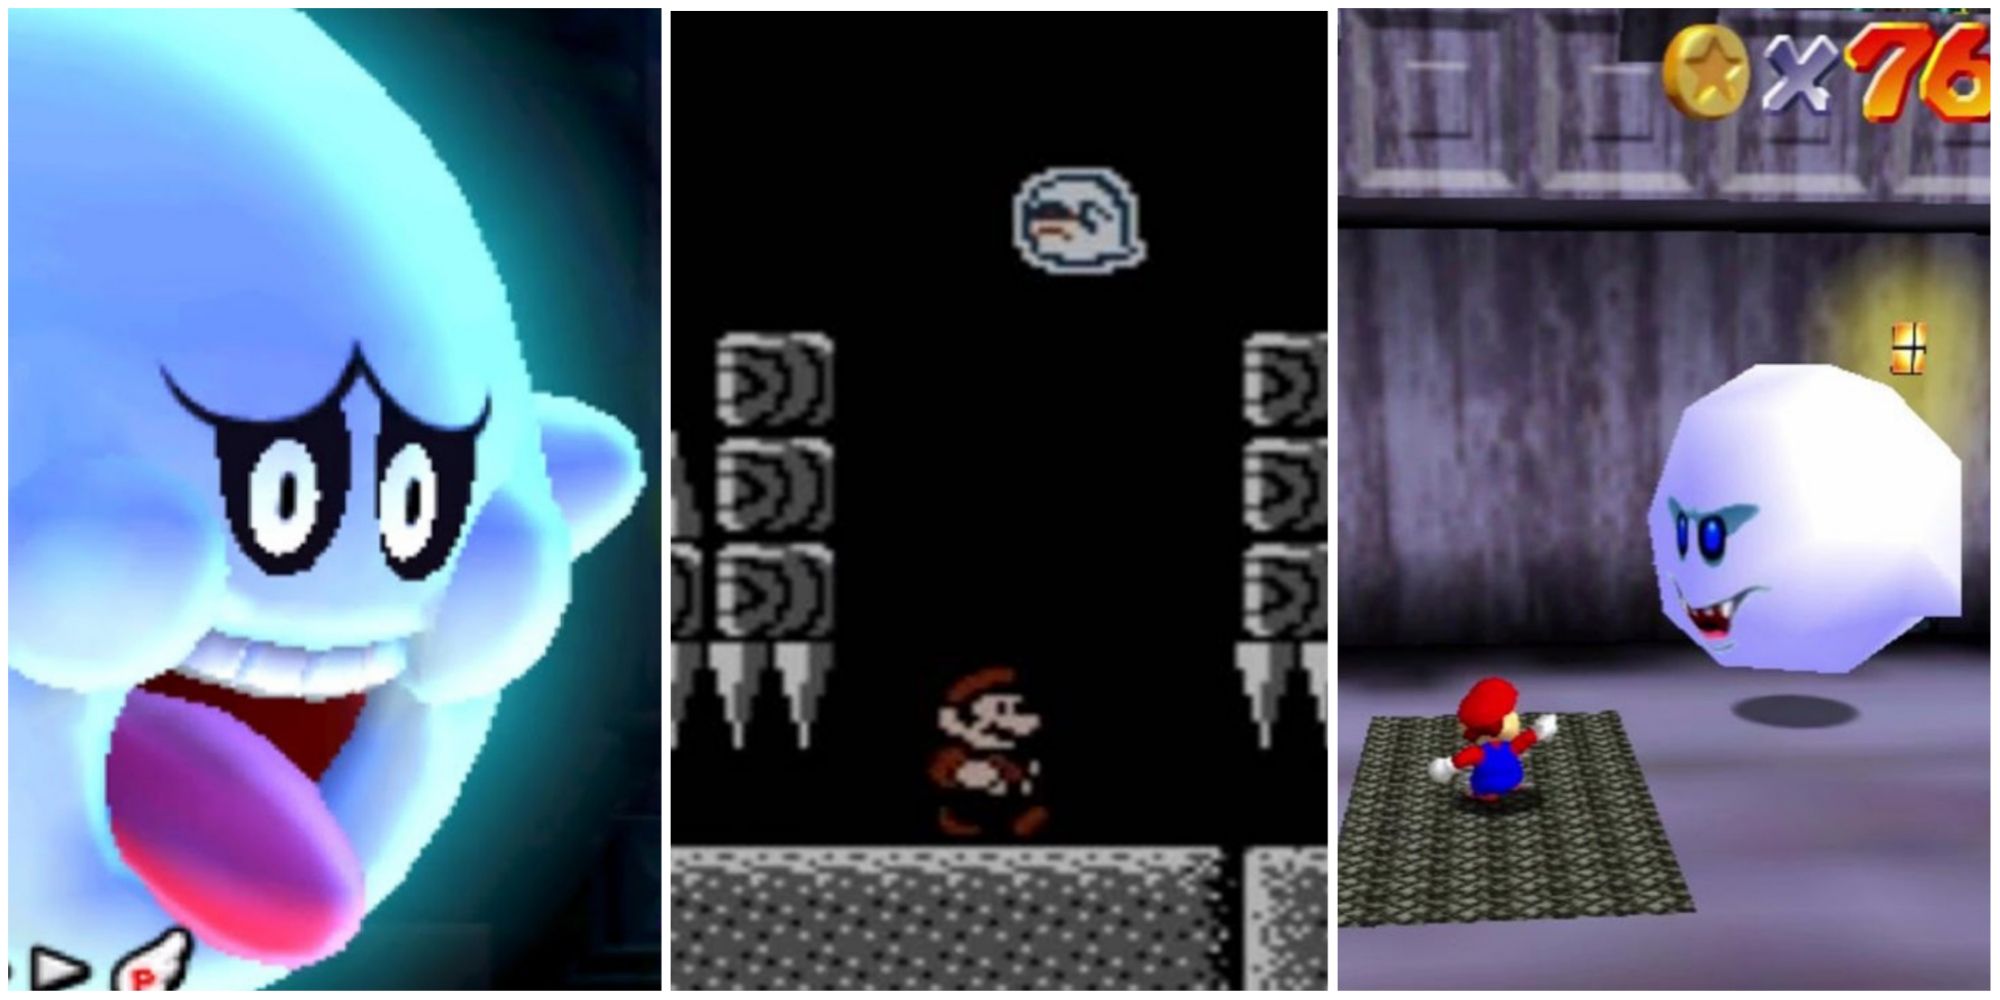 Boo In 3 Different Super Mario Bros Games